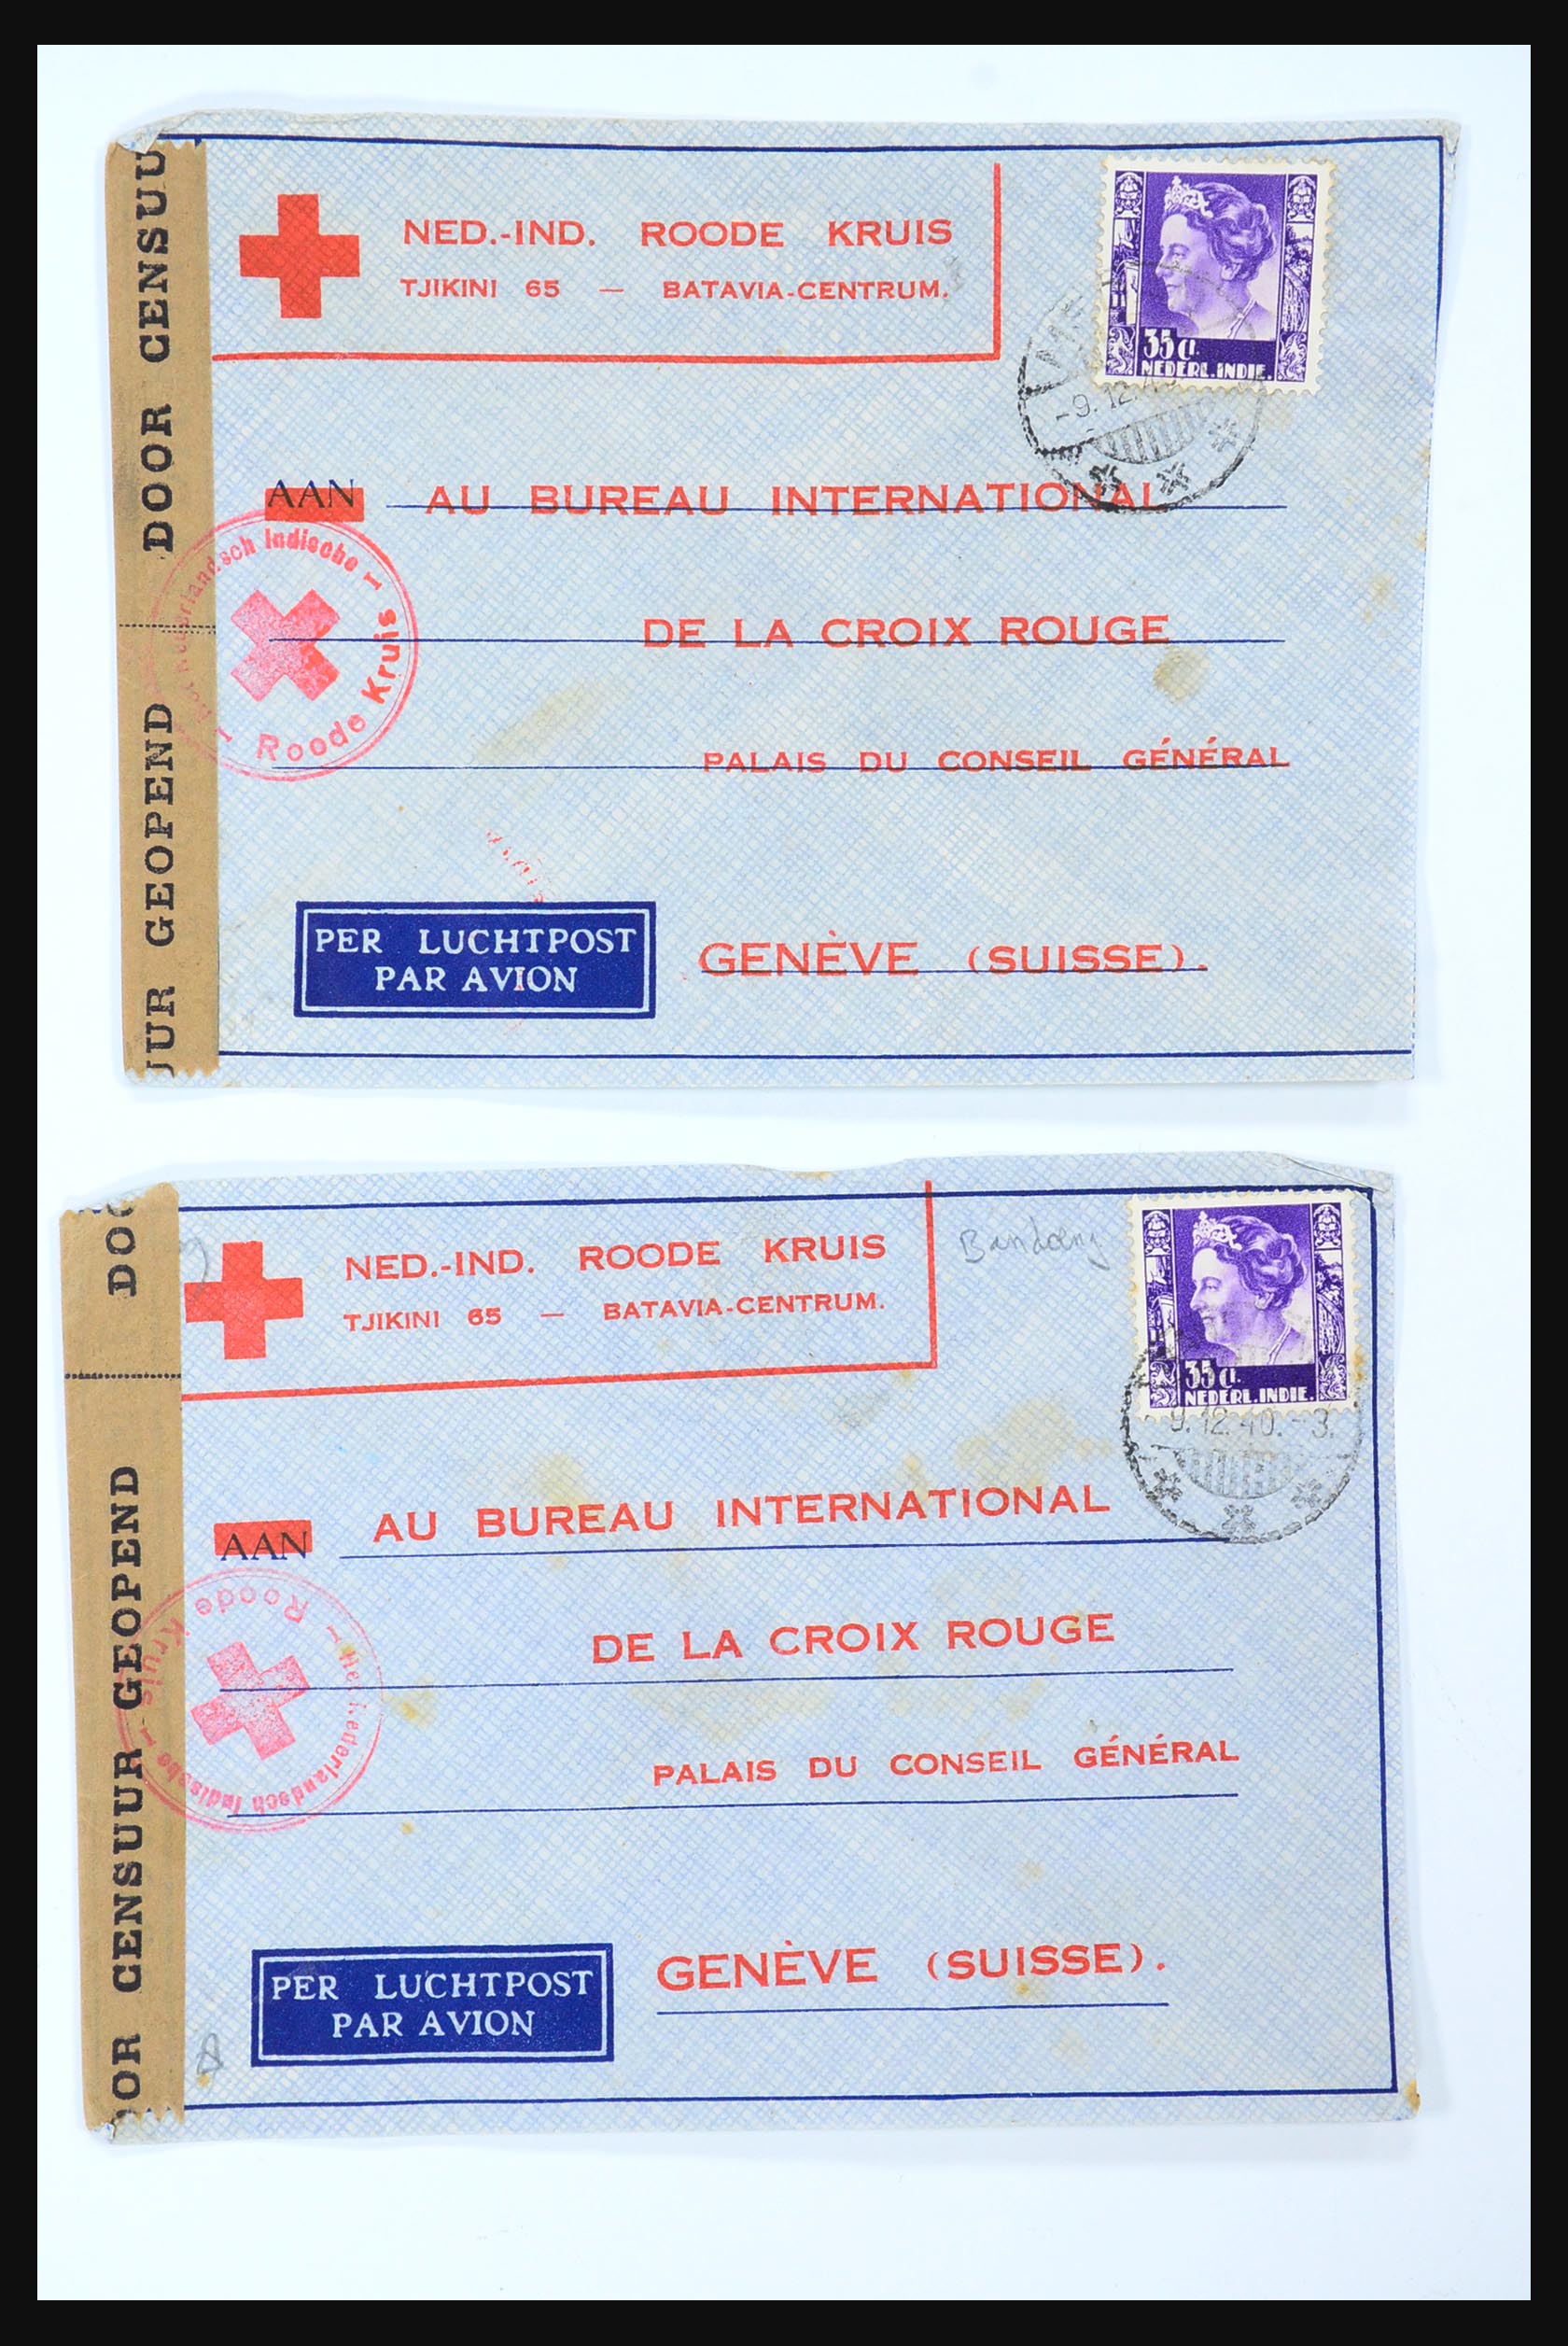 31362 108 - 31362 Nederlands Indië Japanse bezetting brieven 1942-1945.